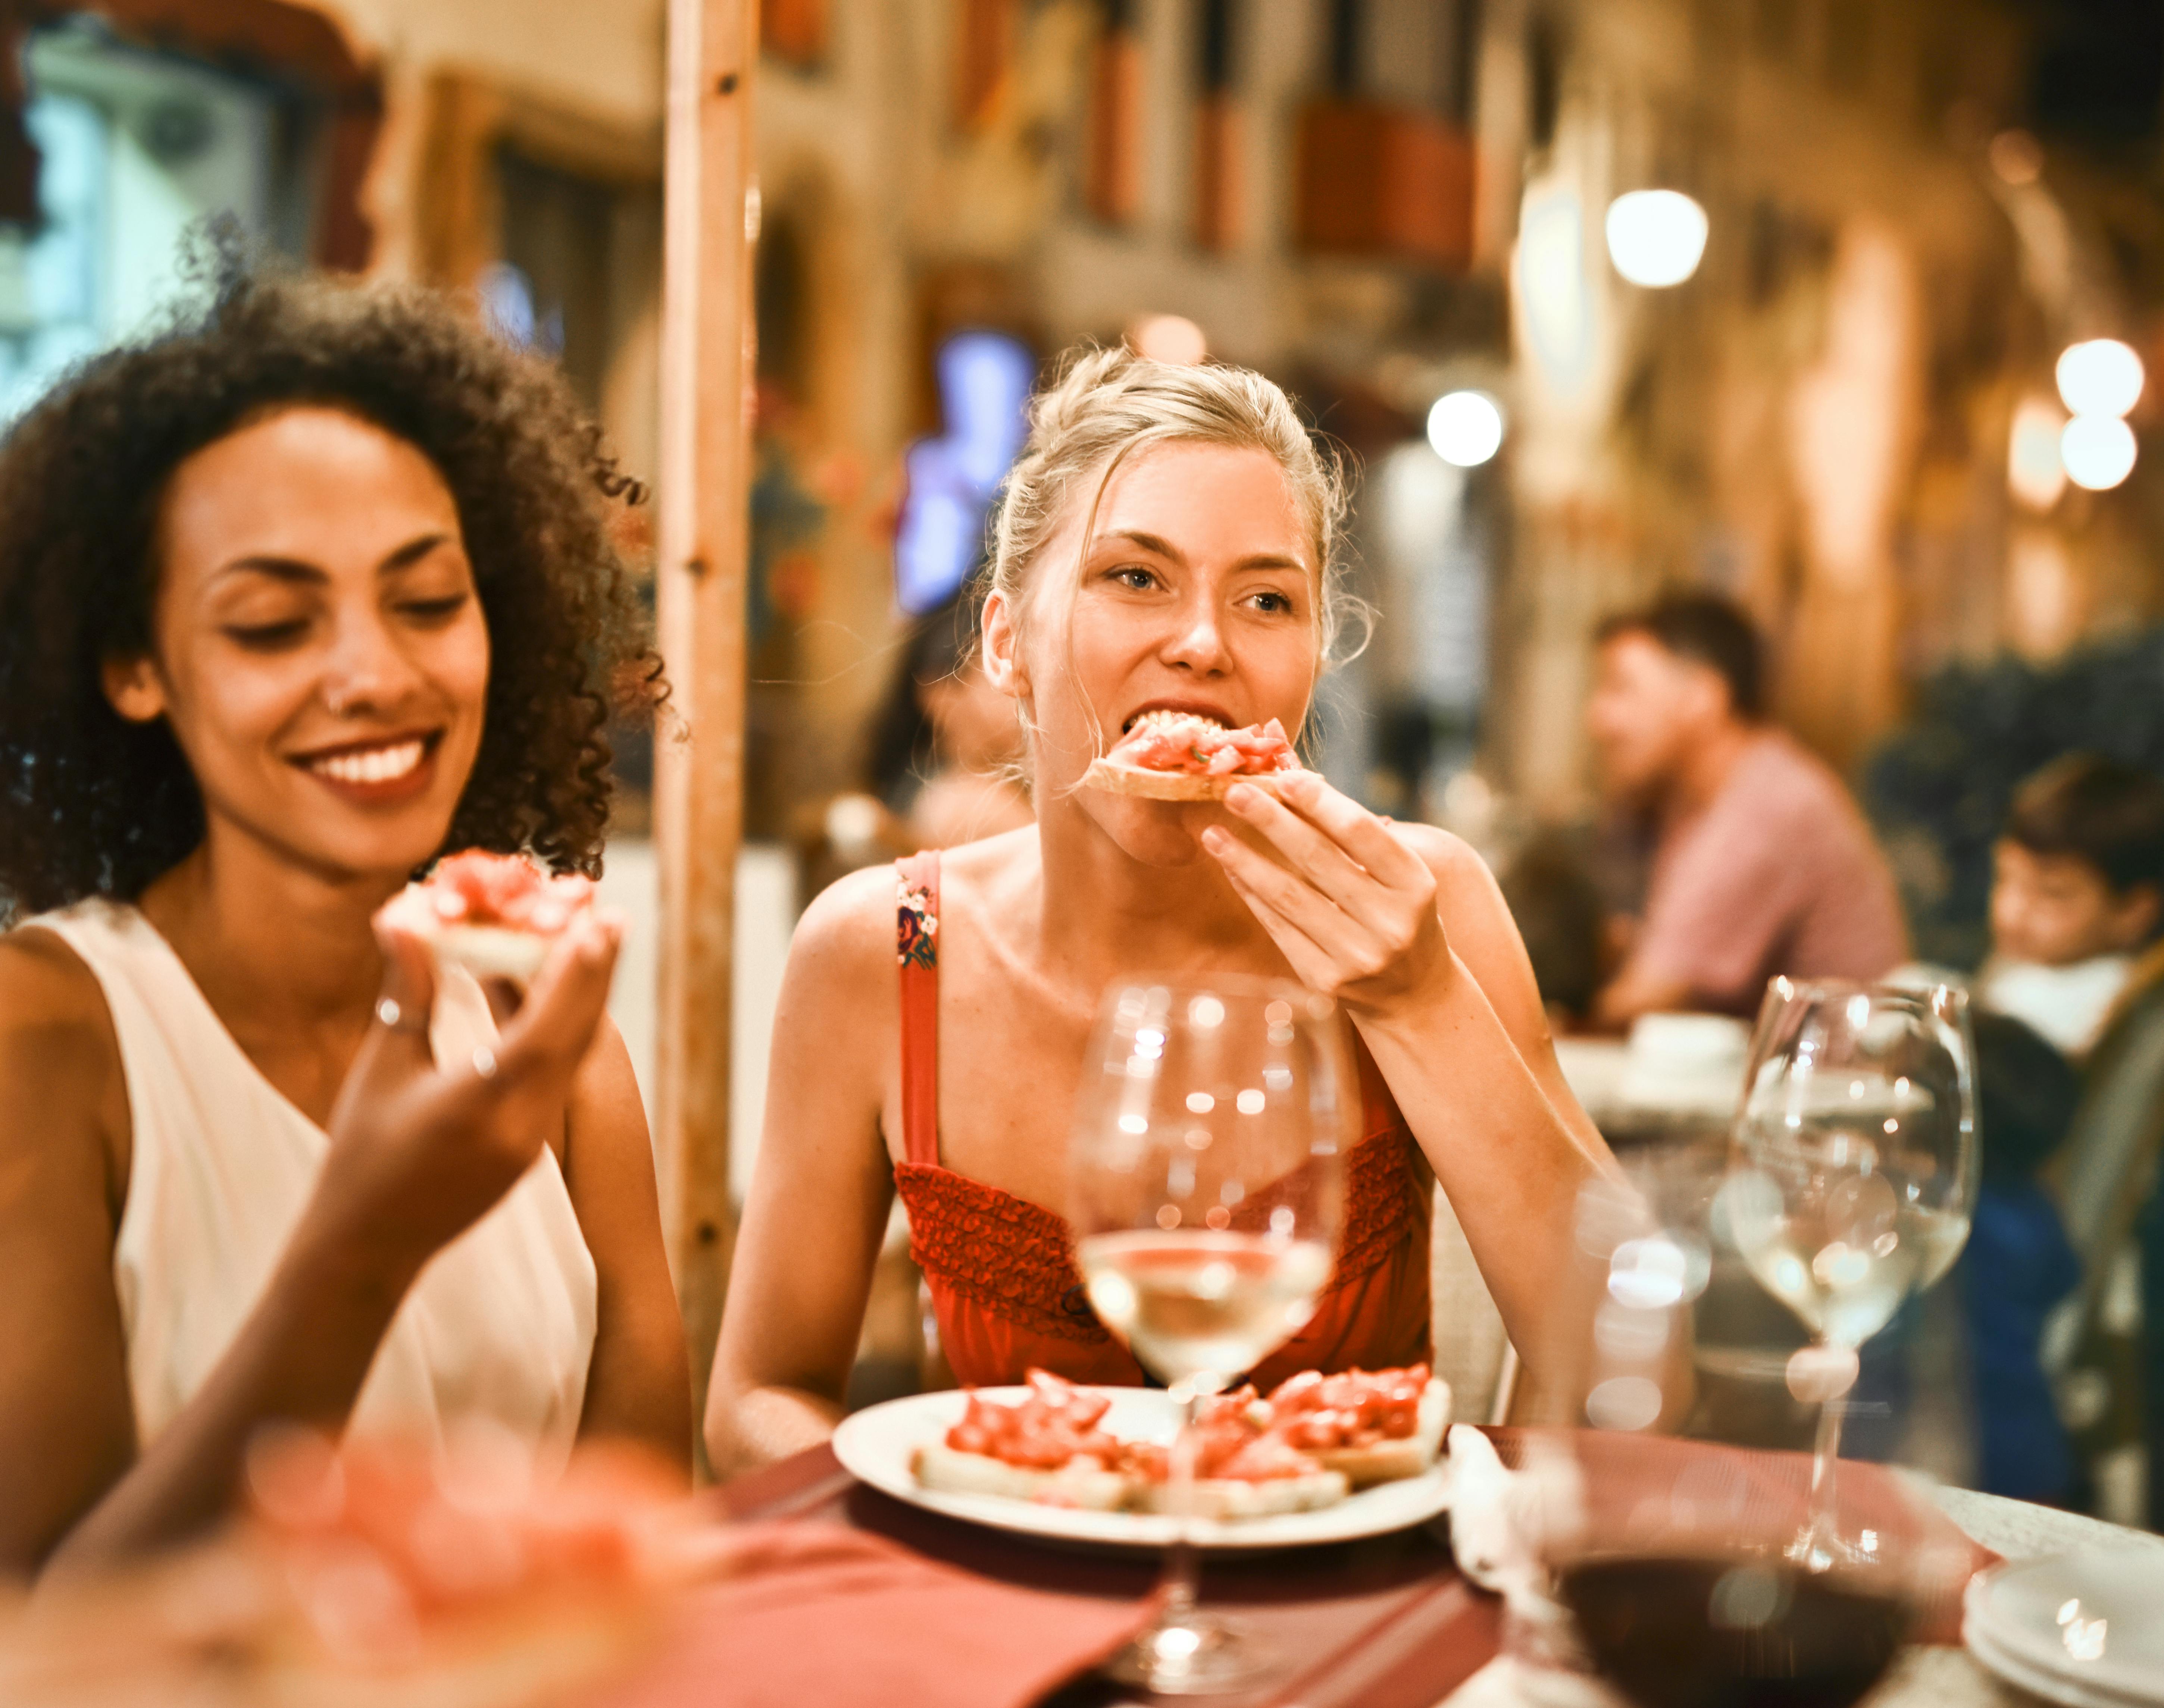 Femmes prenant un repas dans un restaurant | Source : Pexels